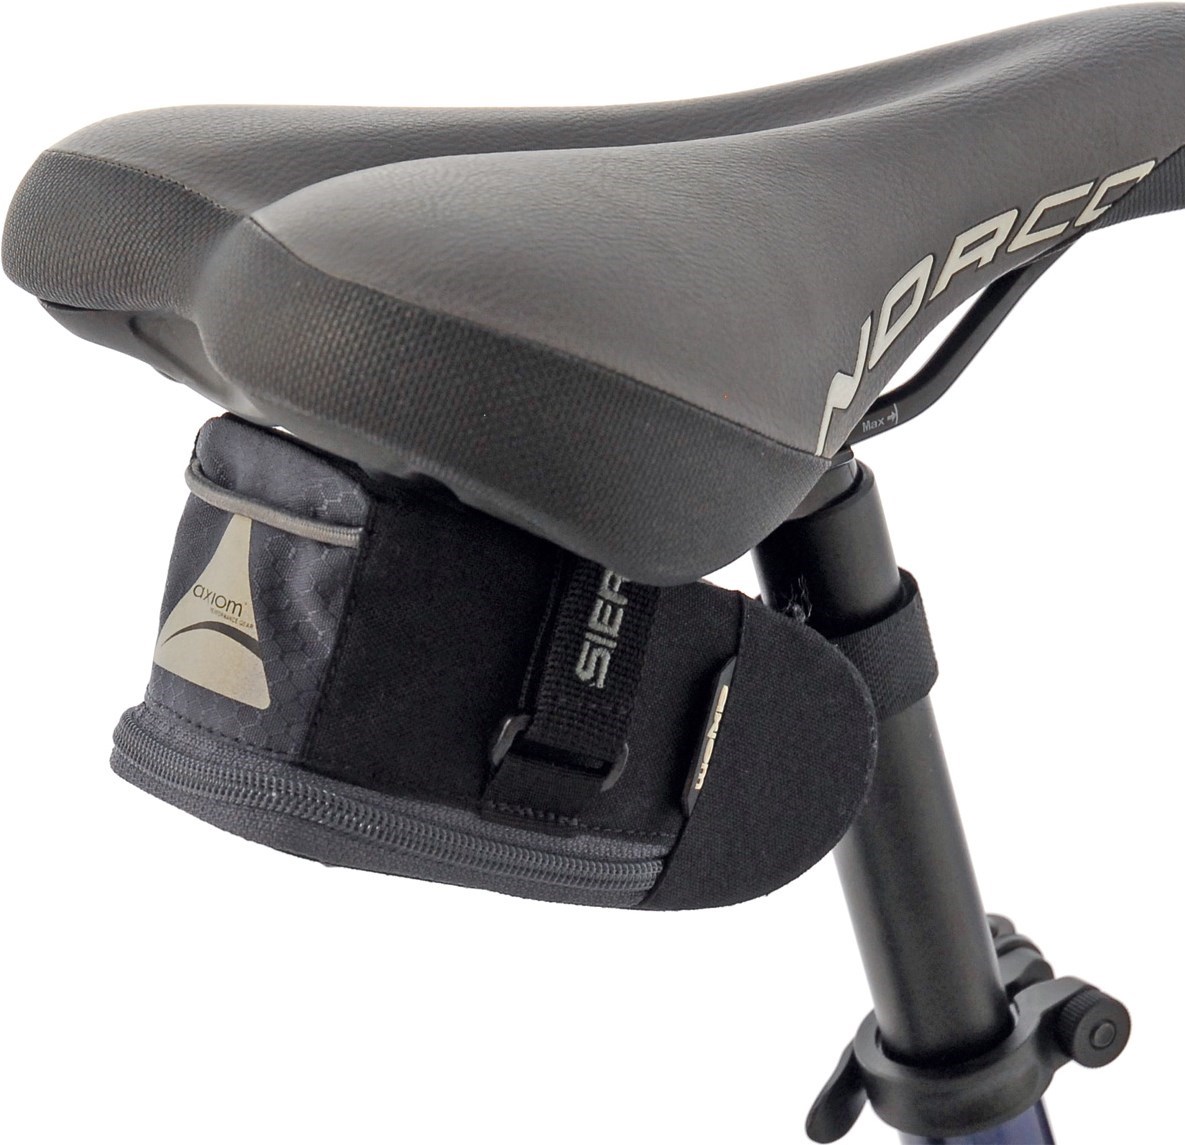 Axiom Sierra LX Seat / Saddle Bag product image